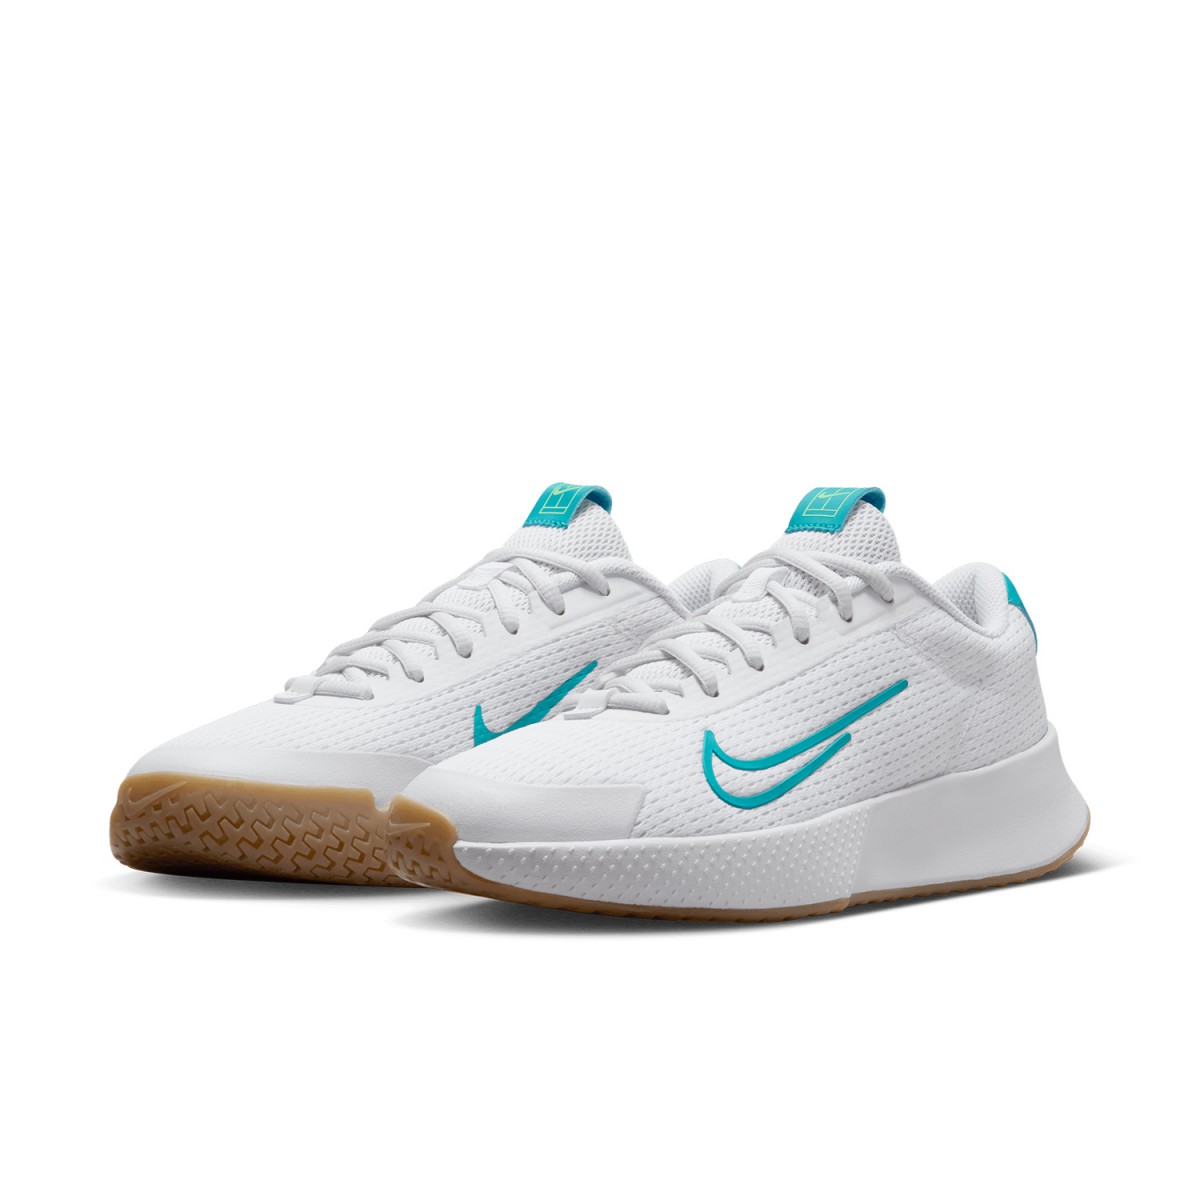 Теннисные кроссовки женские Nike Vapor Lite 2 white/lime blast/gum light brown/teal nebula